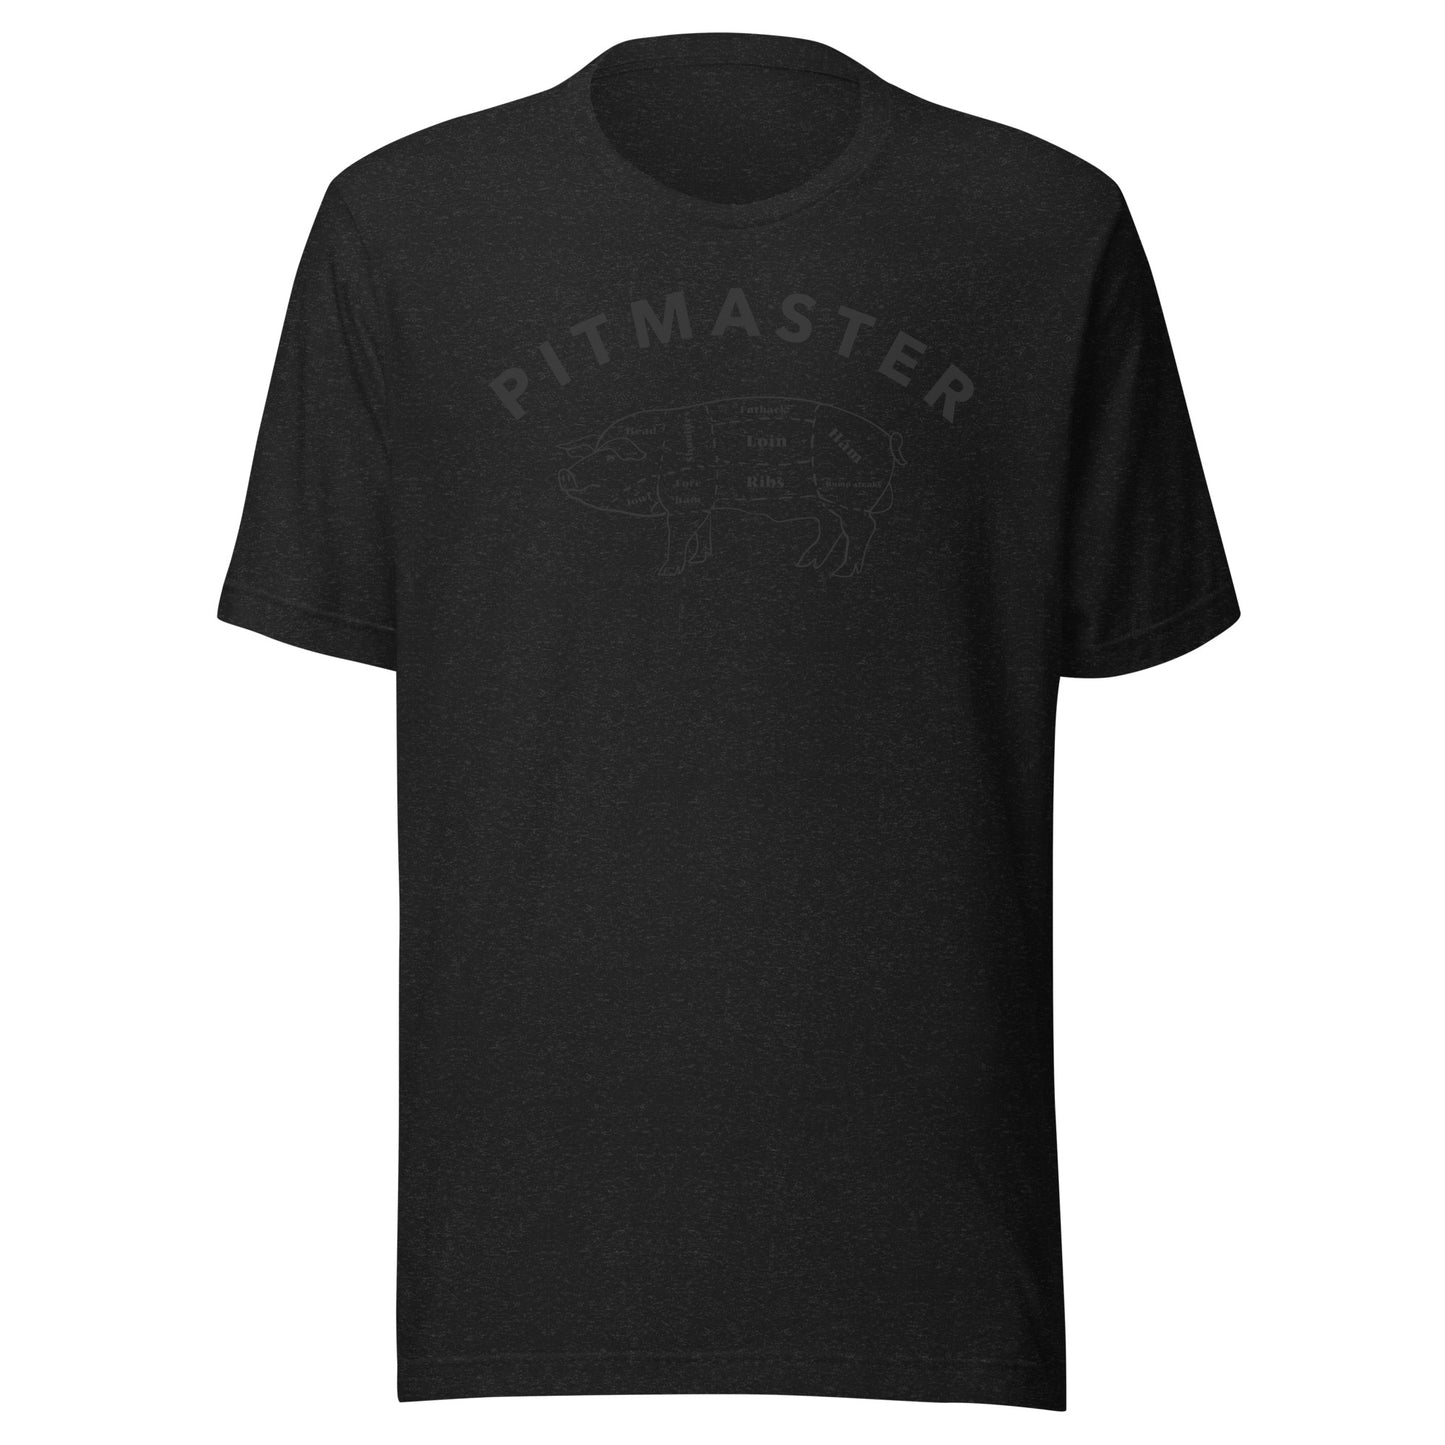 Pitmaster t-shirt - Pork edition